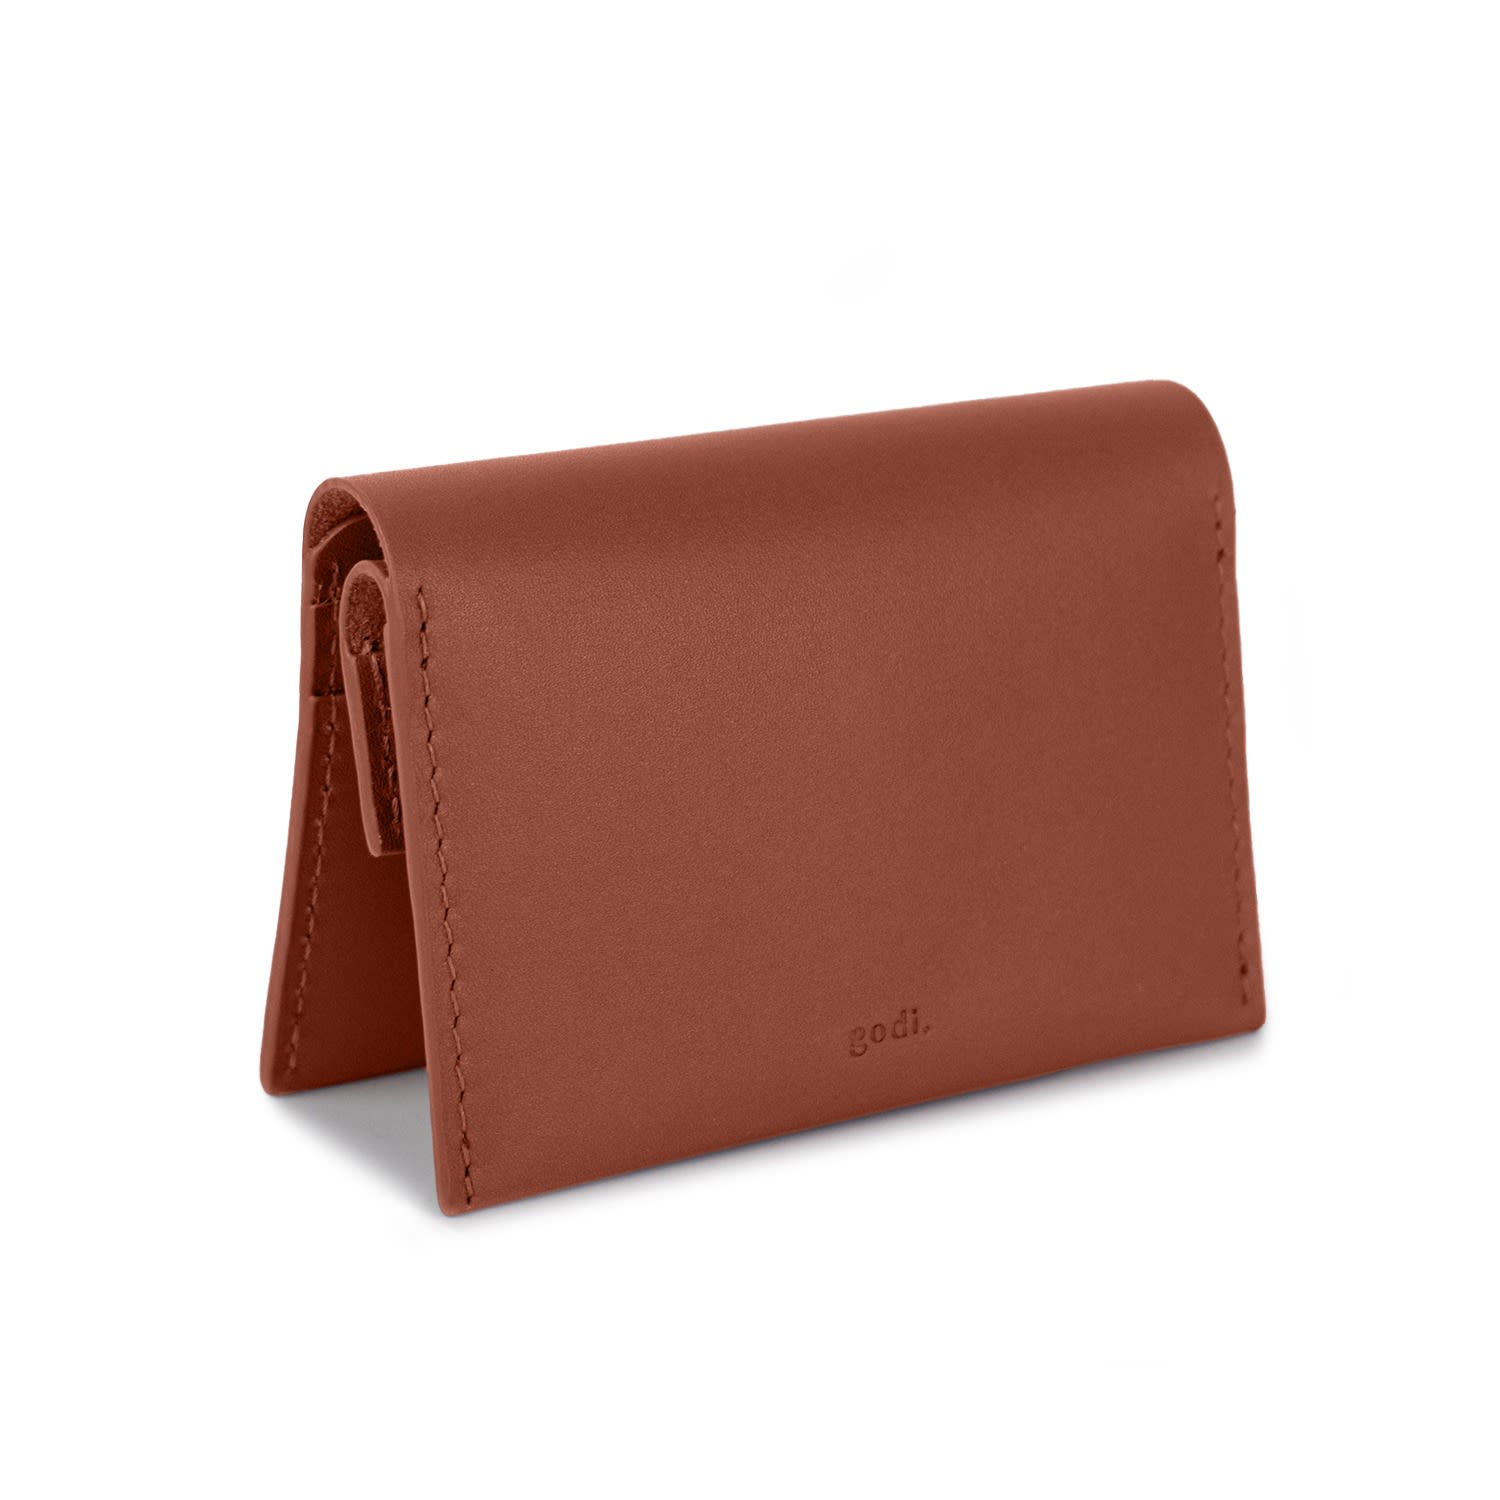 Godi. Men's Rose Gold / Brown Handmade Leather Coin & Card Wallet - Rust Brown In Burgundy